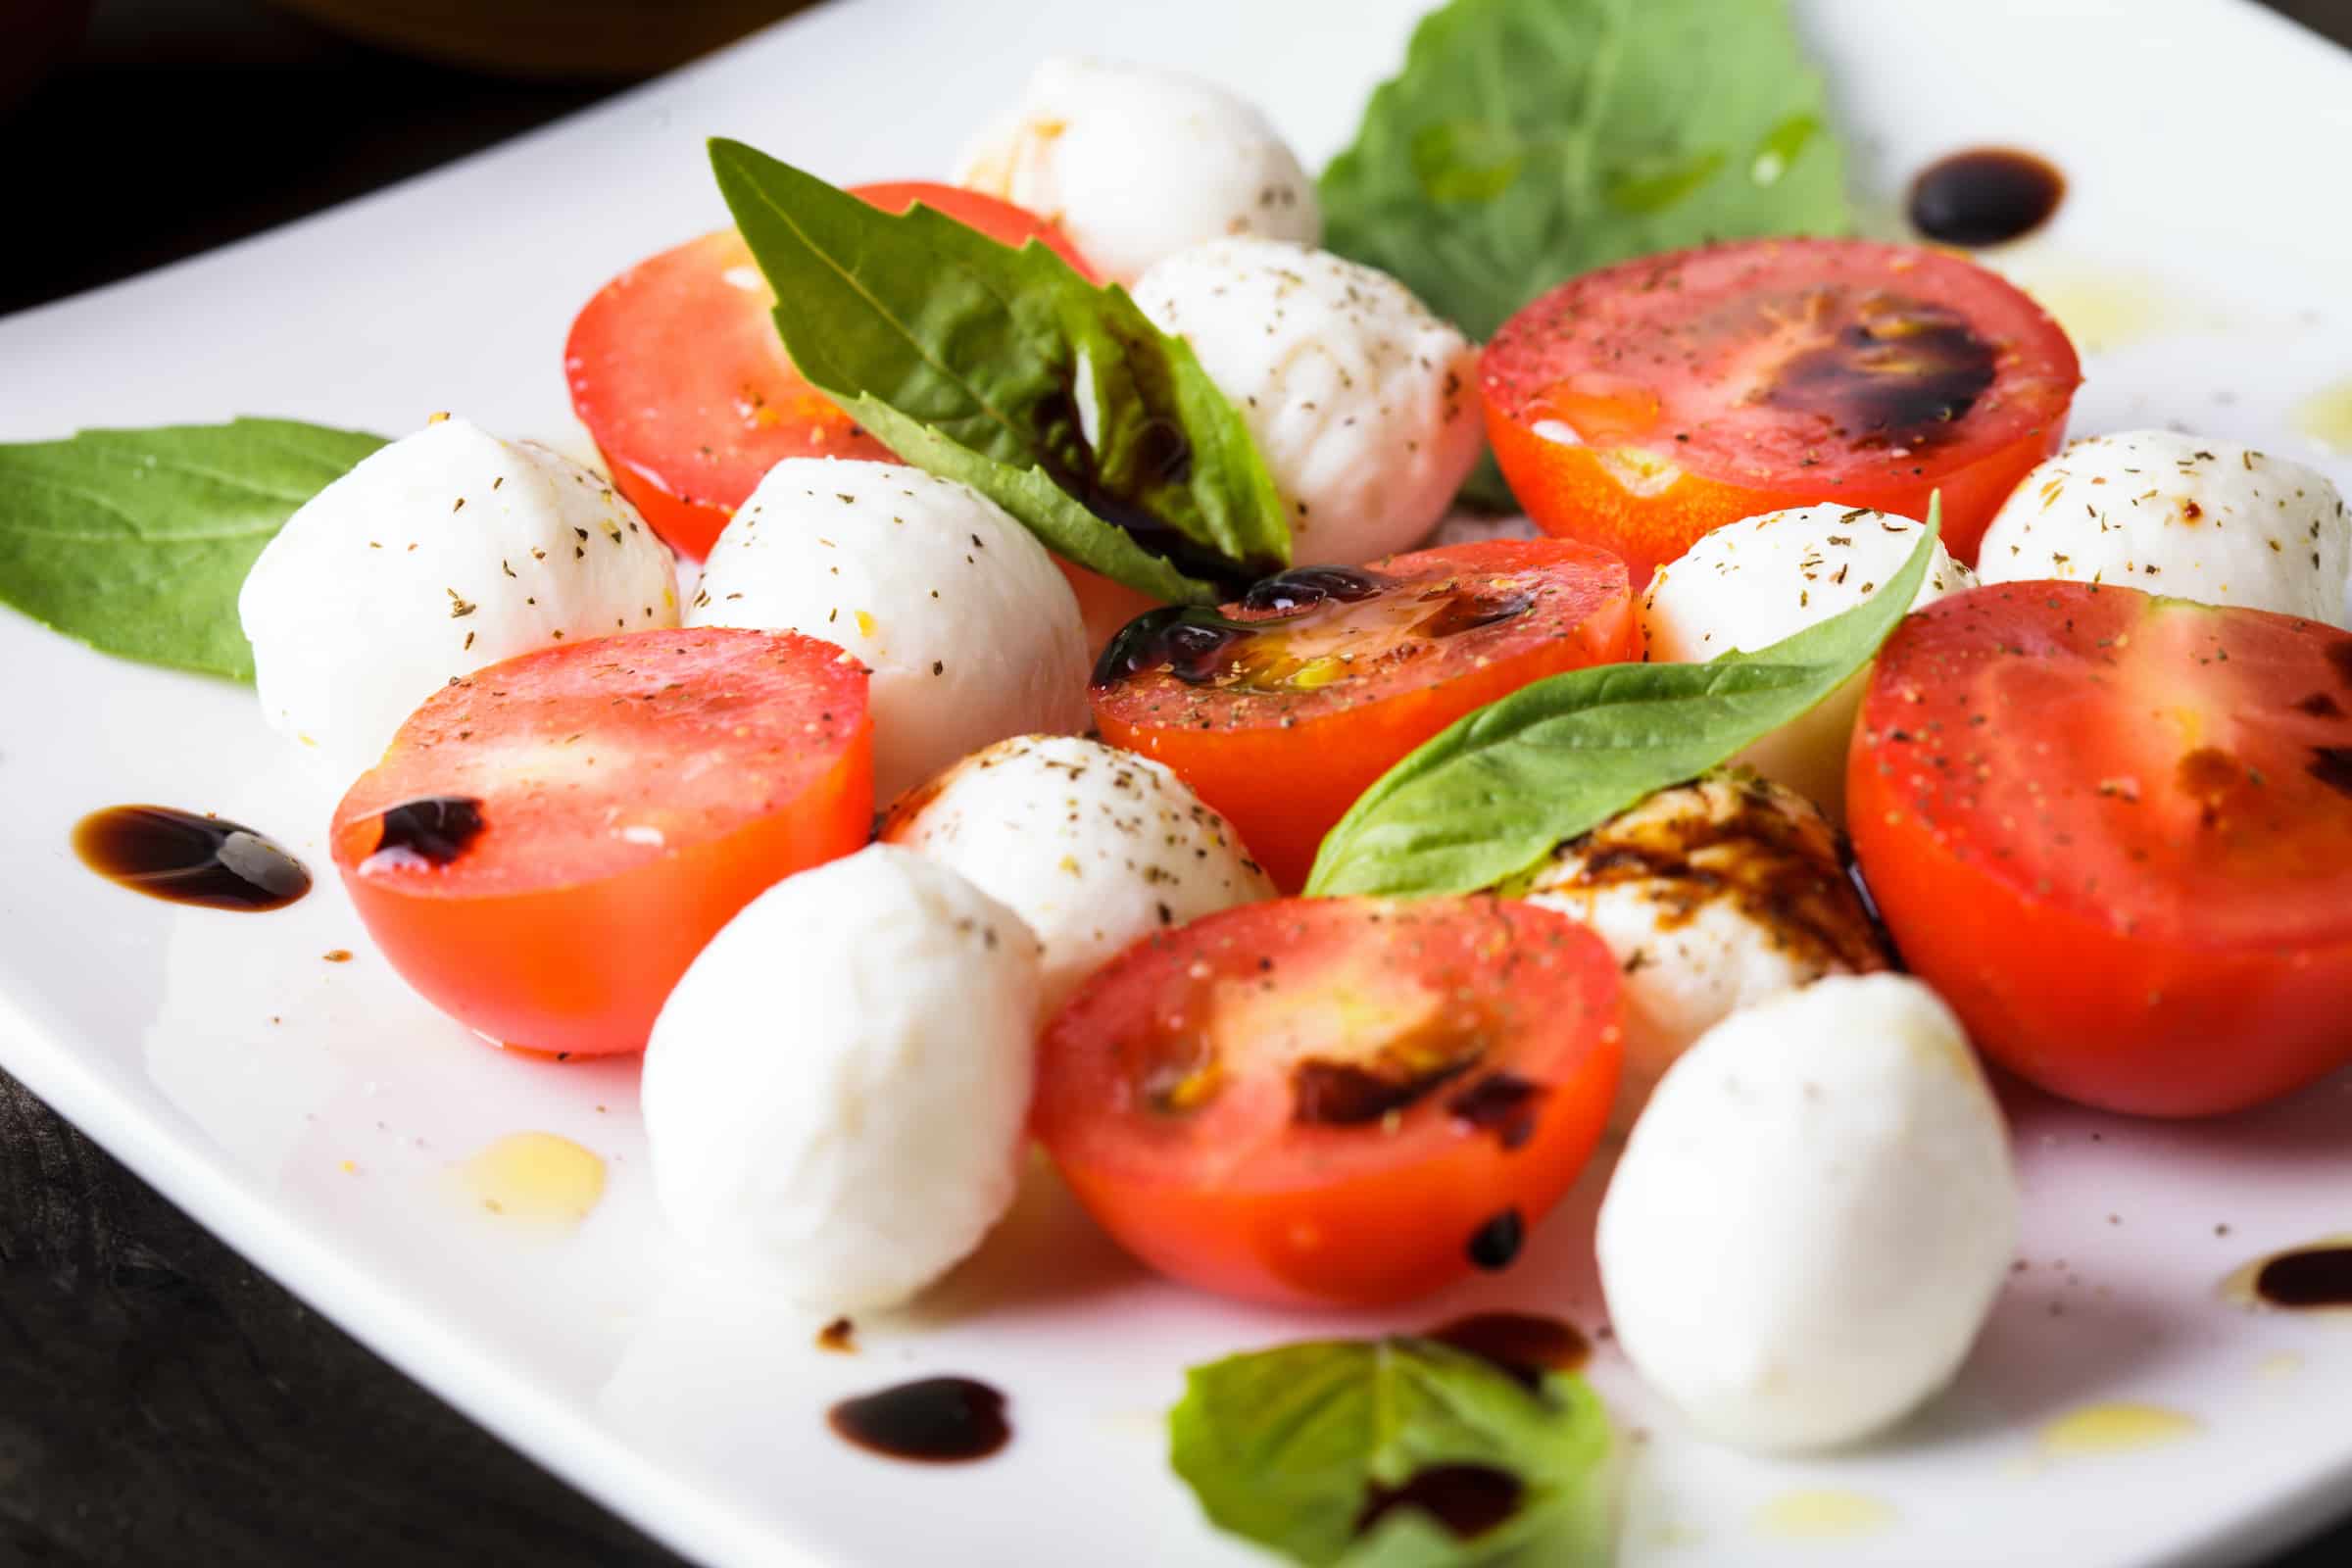 Caprese: cherry tomato, mozzarella balls and basil leaves with balsamic vinegar